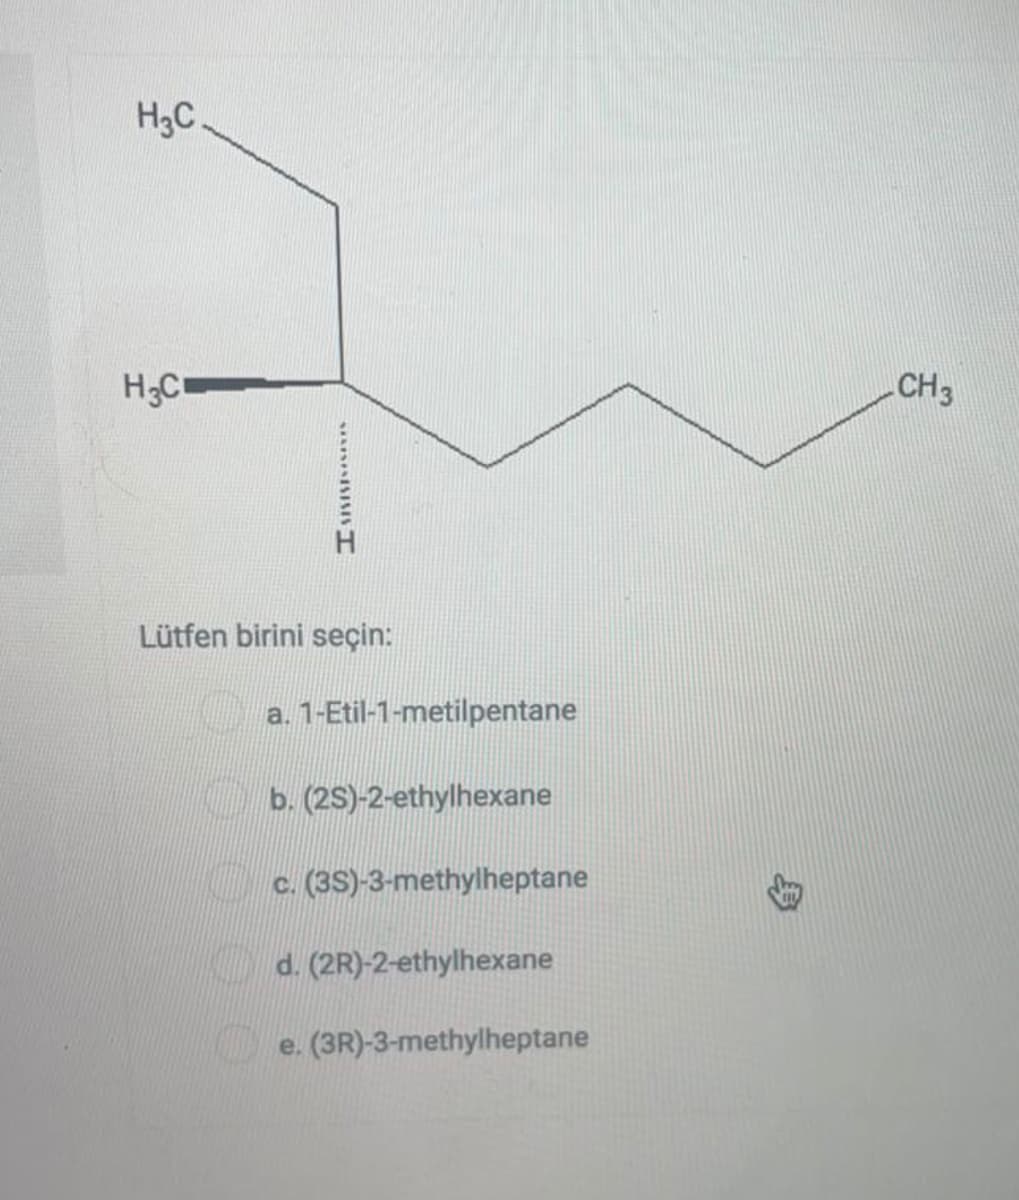 H3C.
H;C
CH3
Lütfen birini seçin:
a. 1-Etil-1-metilpentane
b. (2S)-2-ethylhexane
c. (3S)-3-methylheptane
KDd. (2R)-2-ethylhexane
e. (3R)-3-methylheptane
